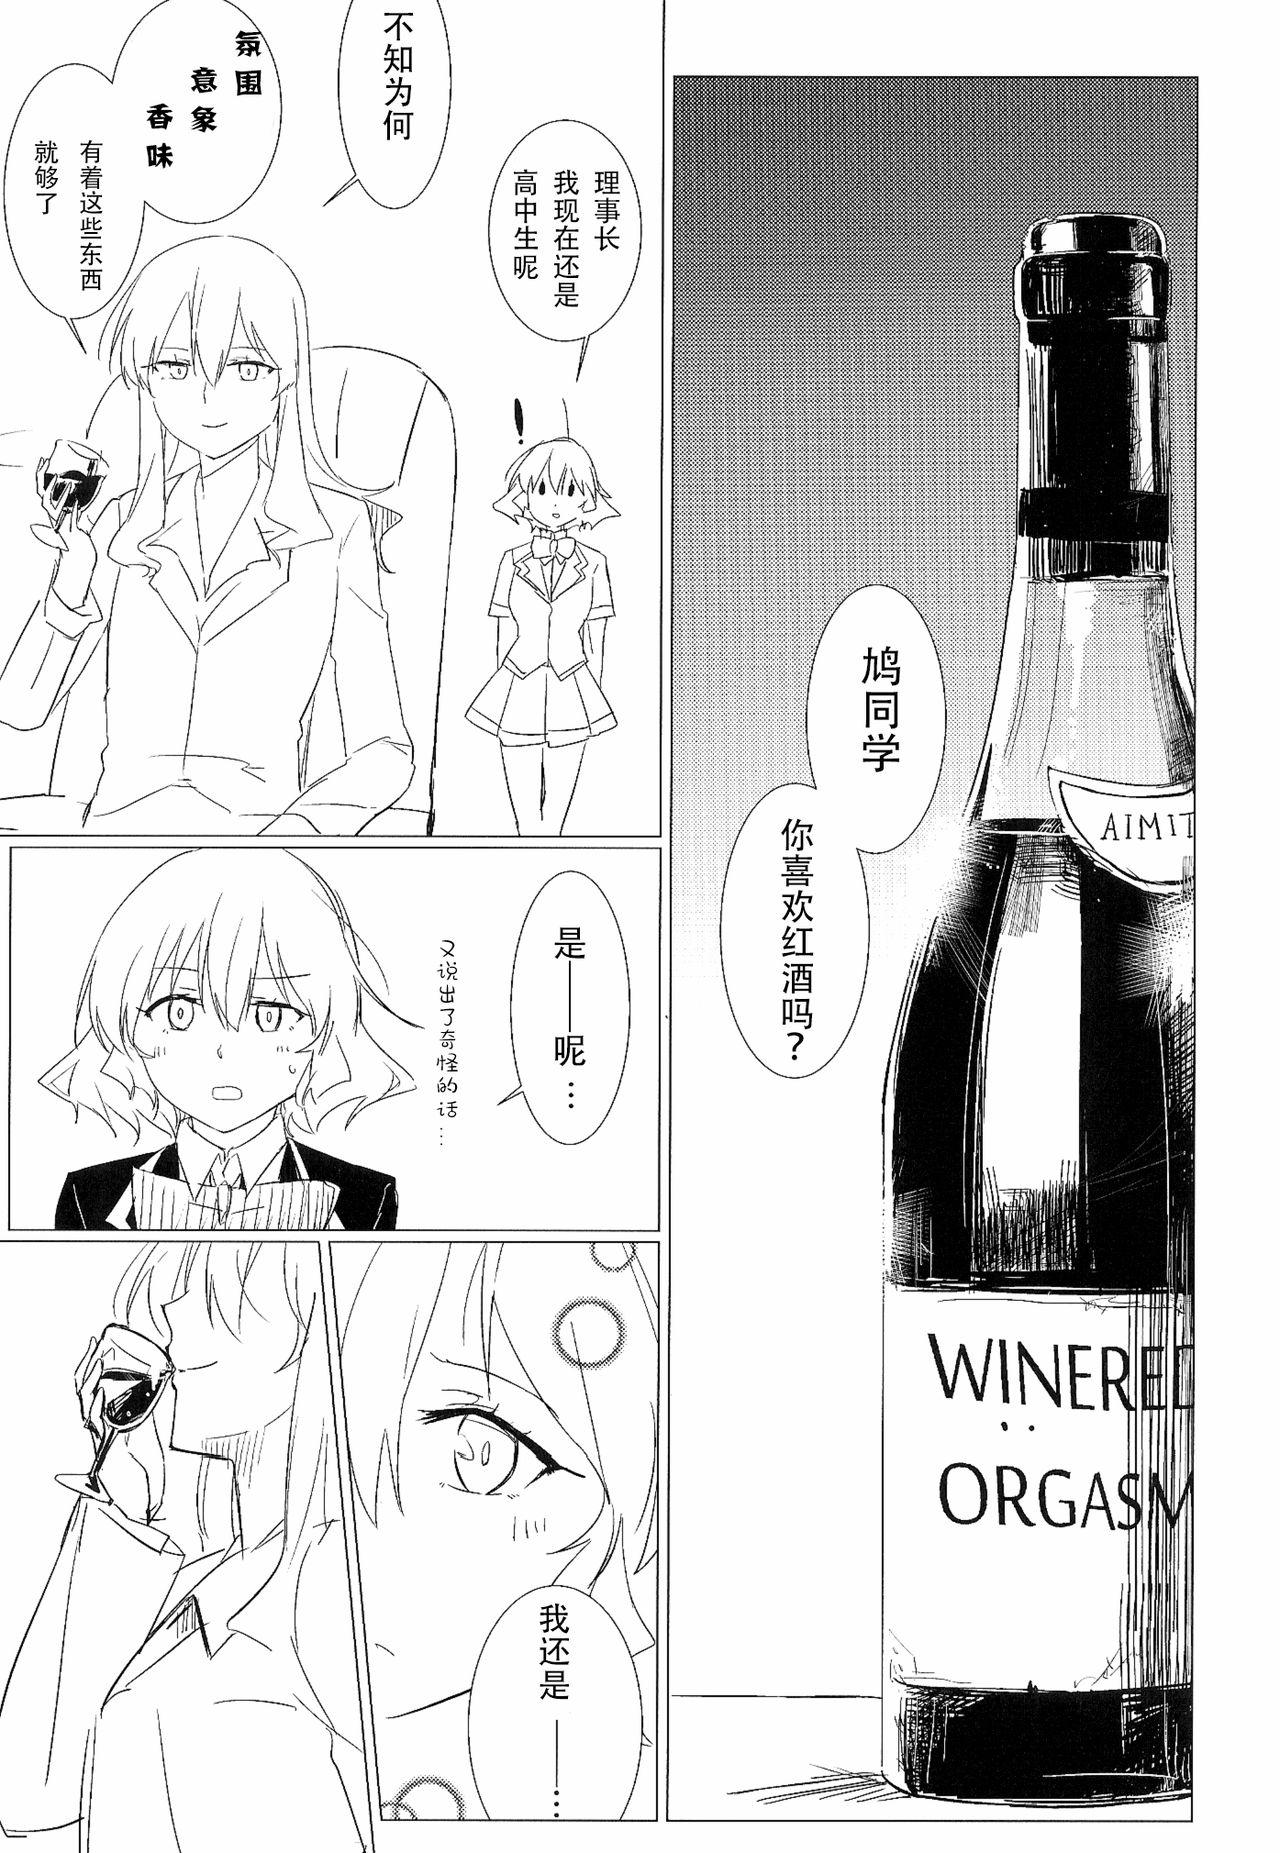 Groupfuck Wine Red Orgasm - Akuma no riddle Spying - Page 4